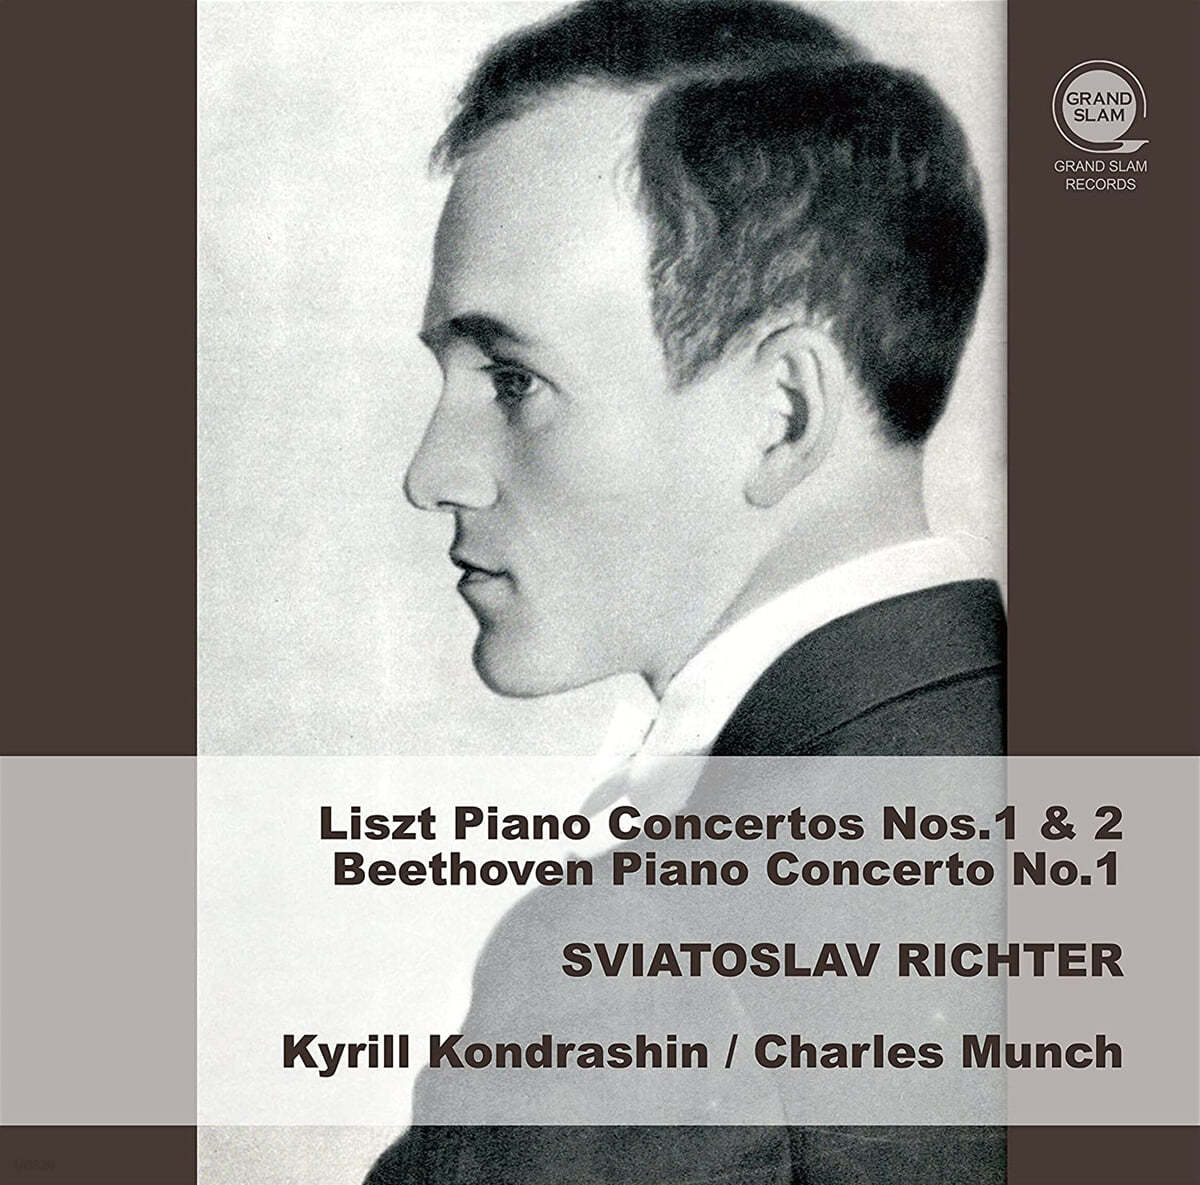 Sviatoslav Richter 리스트 / 베토벤: 피아노 협주곡 - 스비아토슬라프 리히테르 (Liszt: Piano Concertos S.124, S.125 / Beethoven: Piano Concerto Op.15)